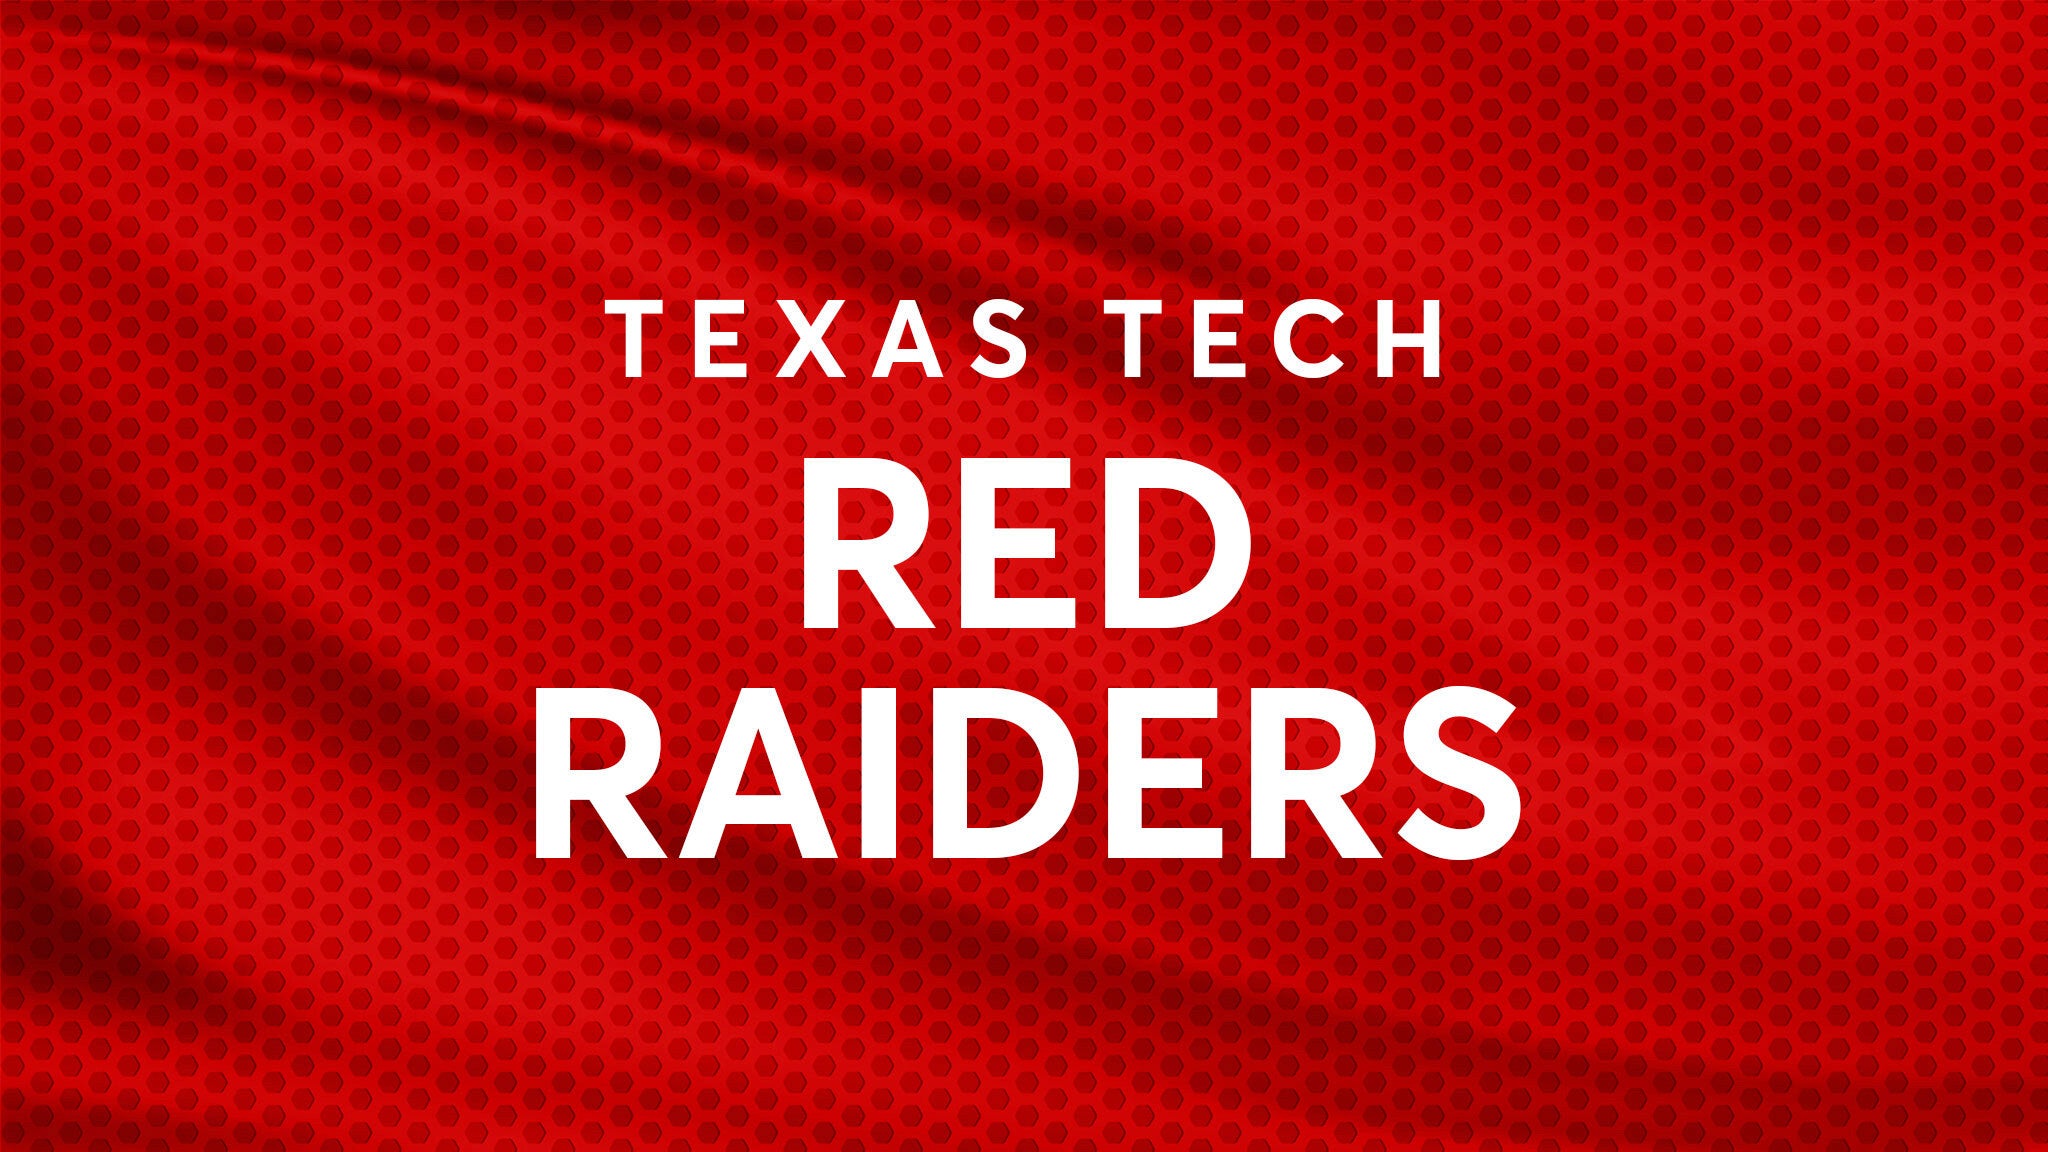 Texas Tech Red Raiders Football vs. Abilene Christian Wildcats Football hero